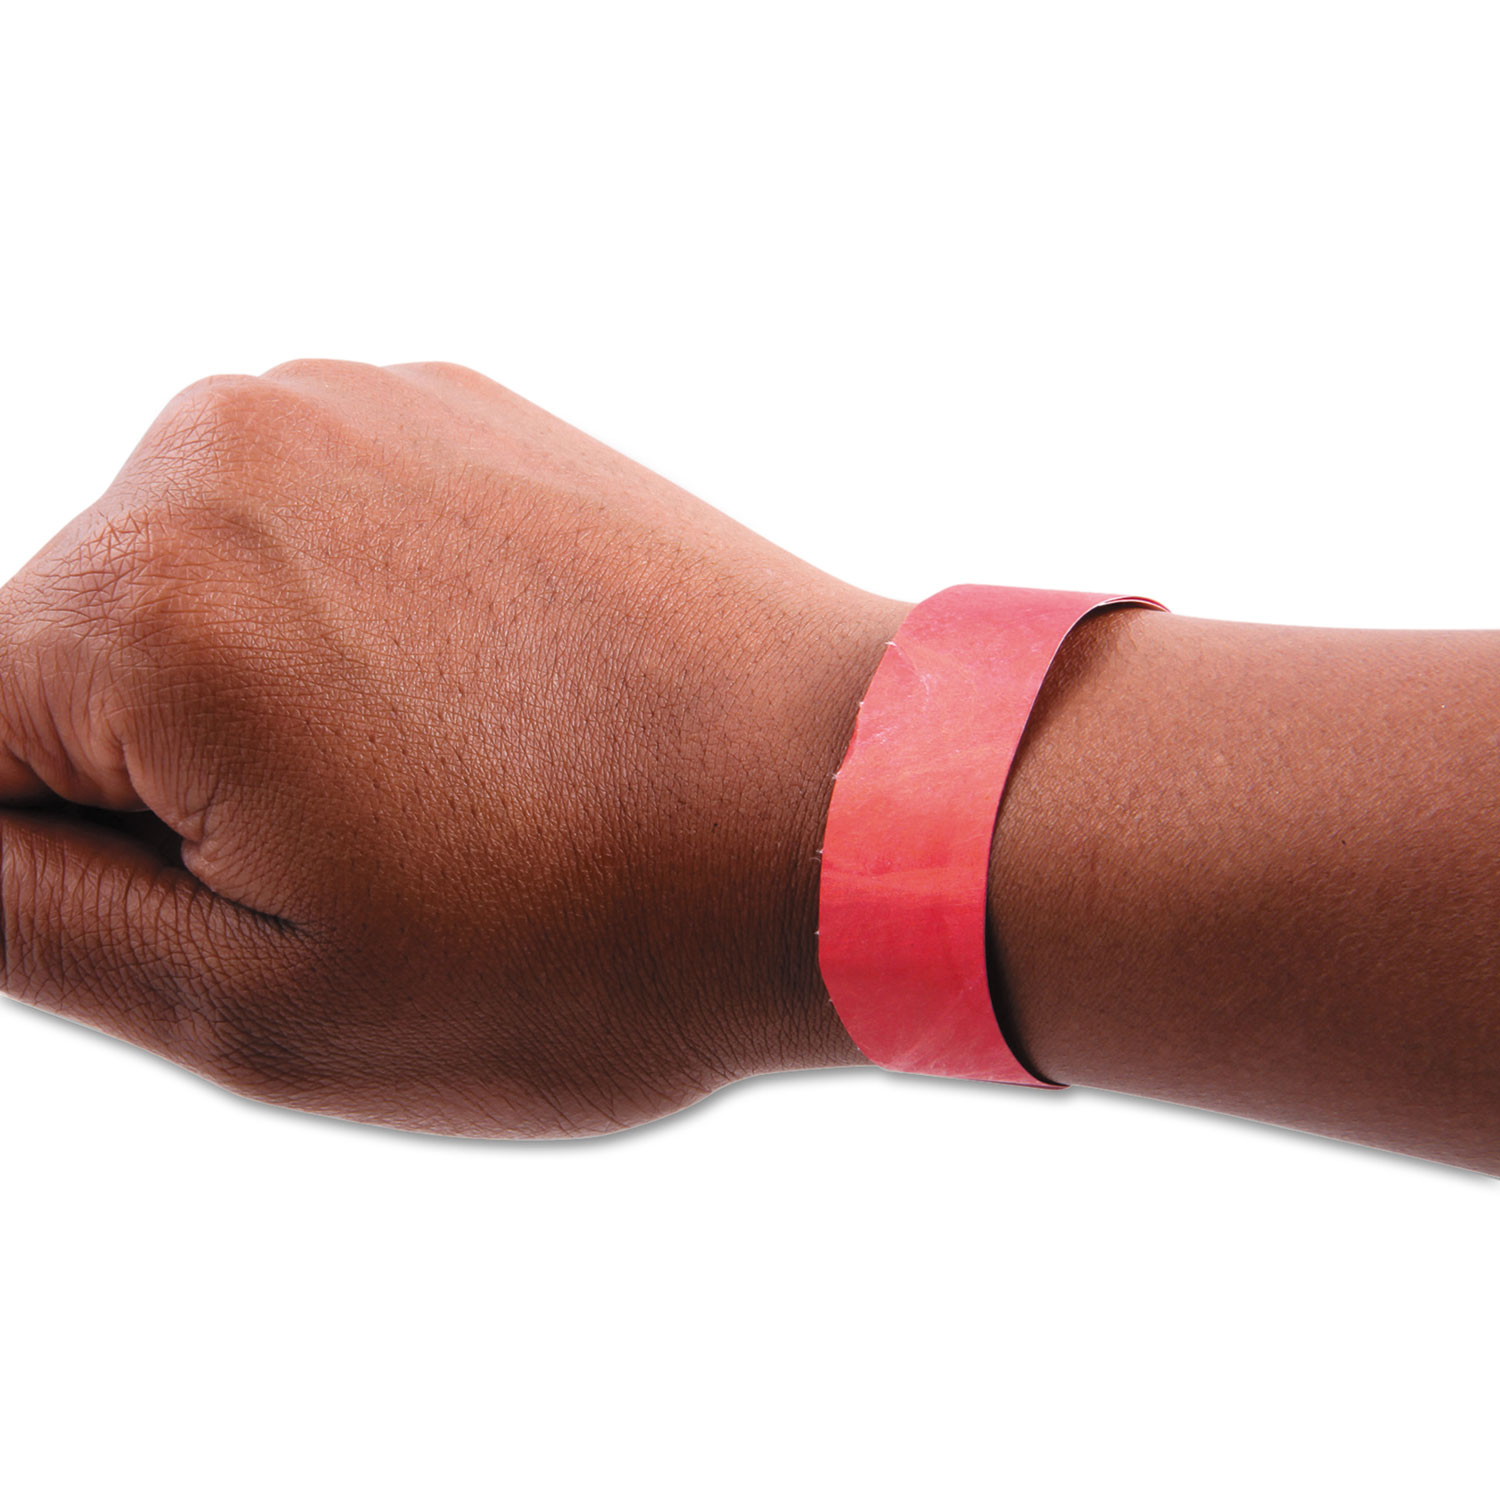 Wristpass Security Wristbands, 3/4 x 10, Red, 100/Pack